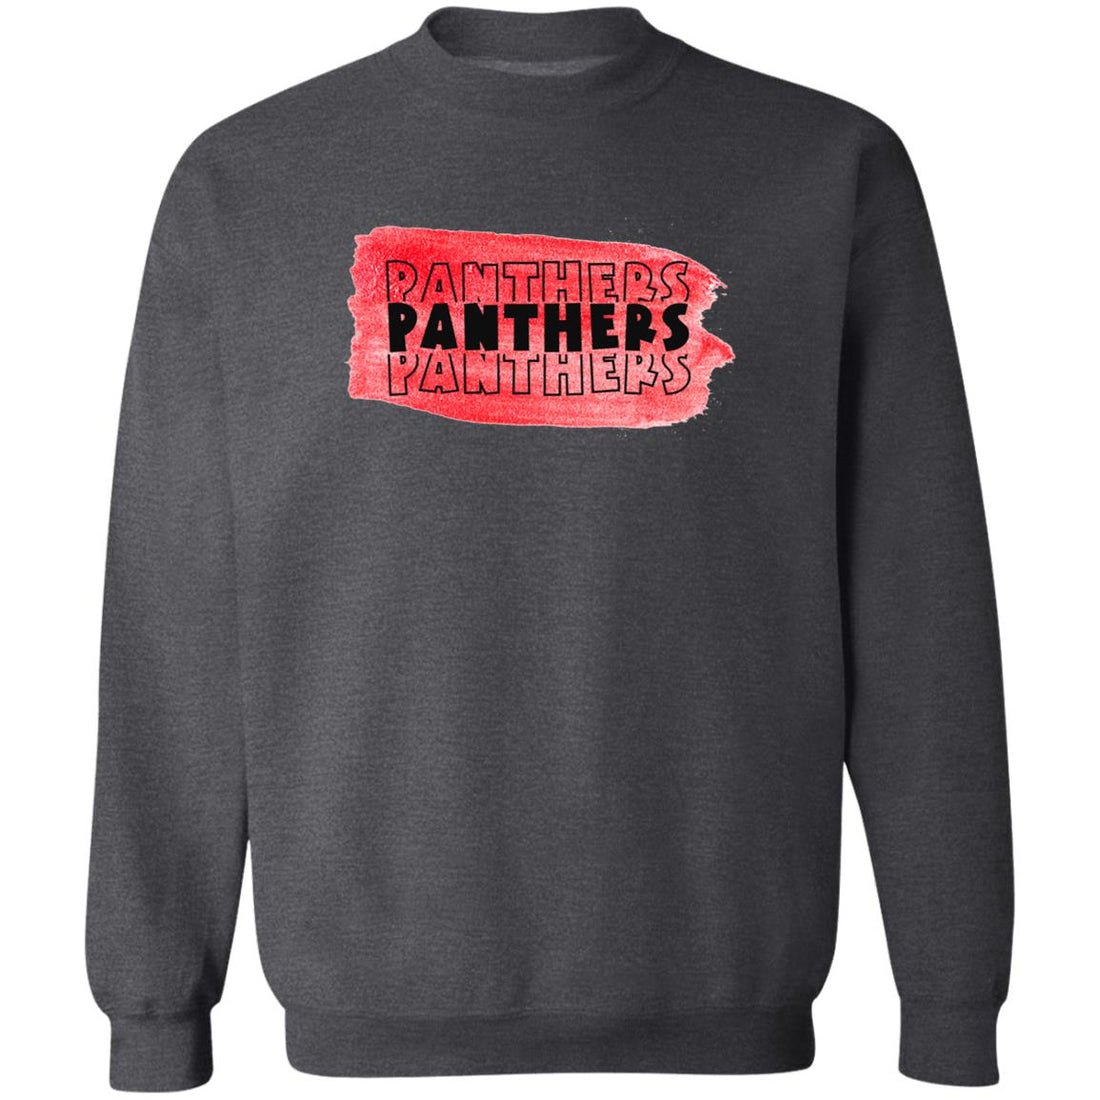 Great Bend Panthers Crewneck Sweatshirts - Positively Sassy